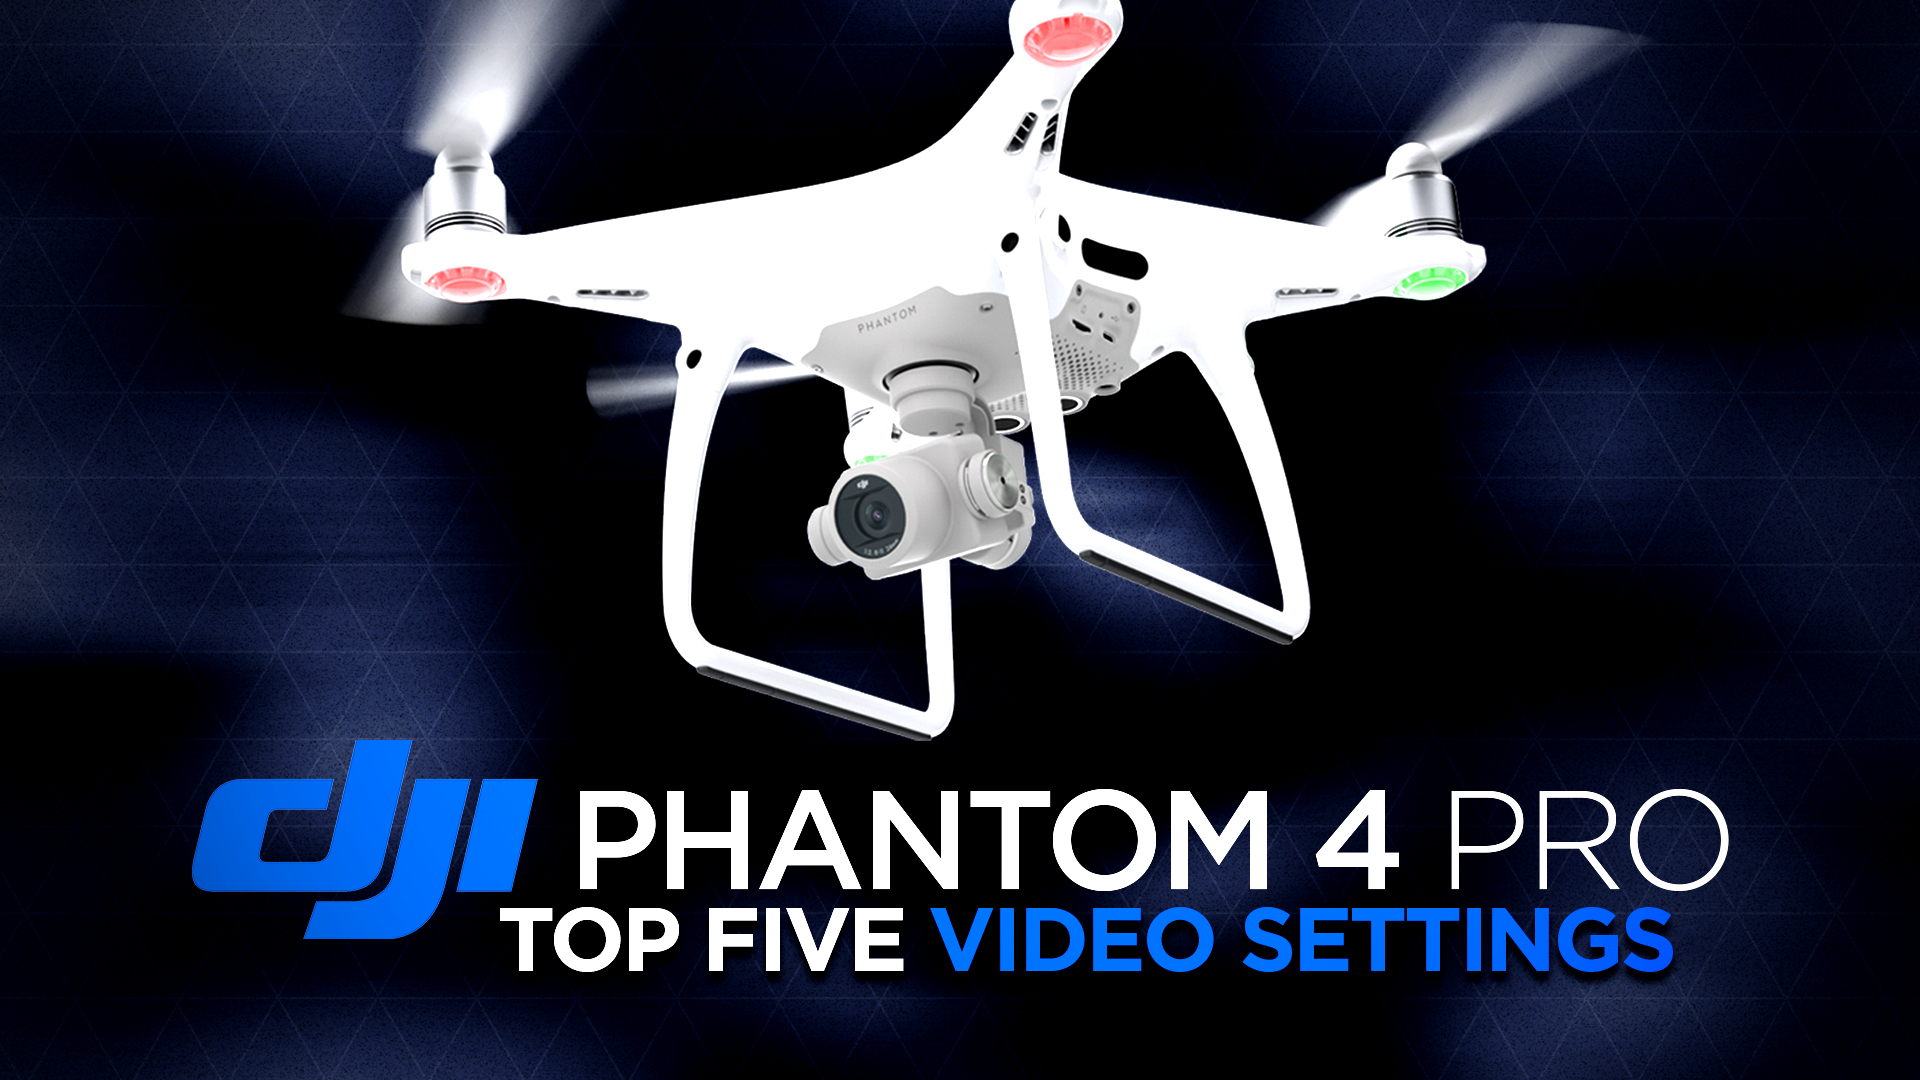 DJI Phantom 4 Pro Top Five Video Settings to Change